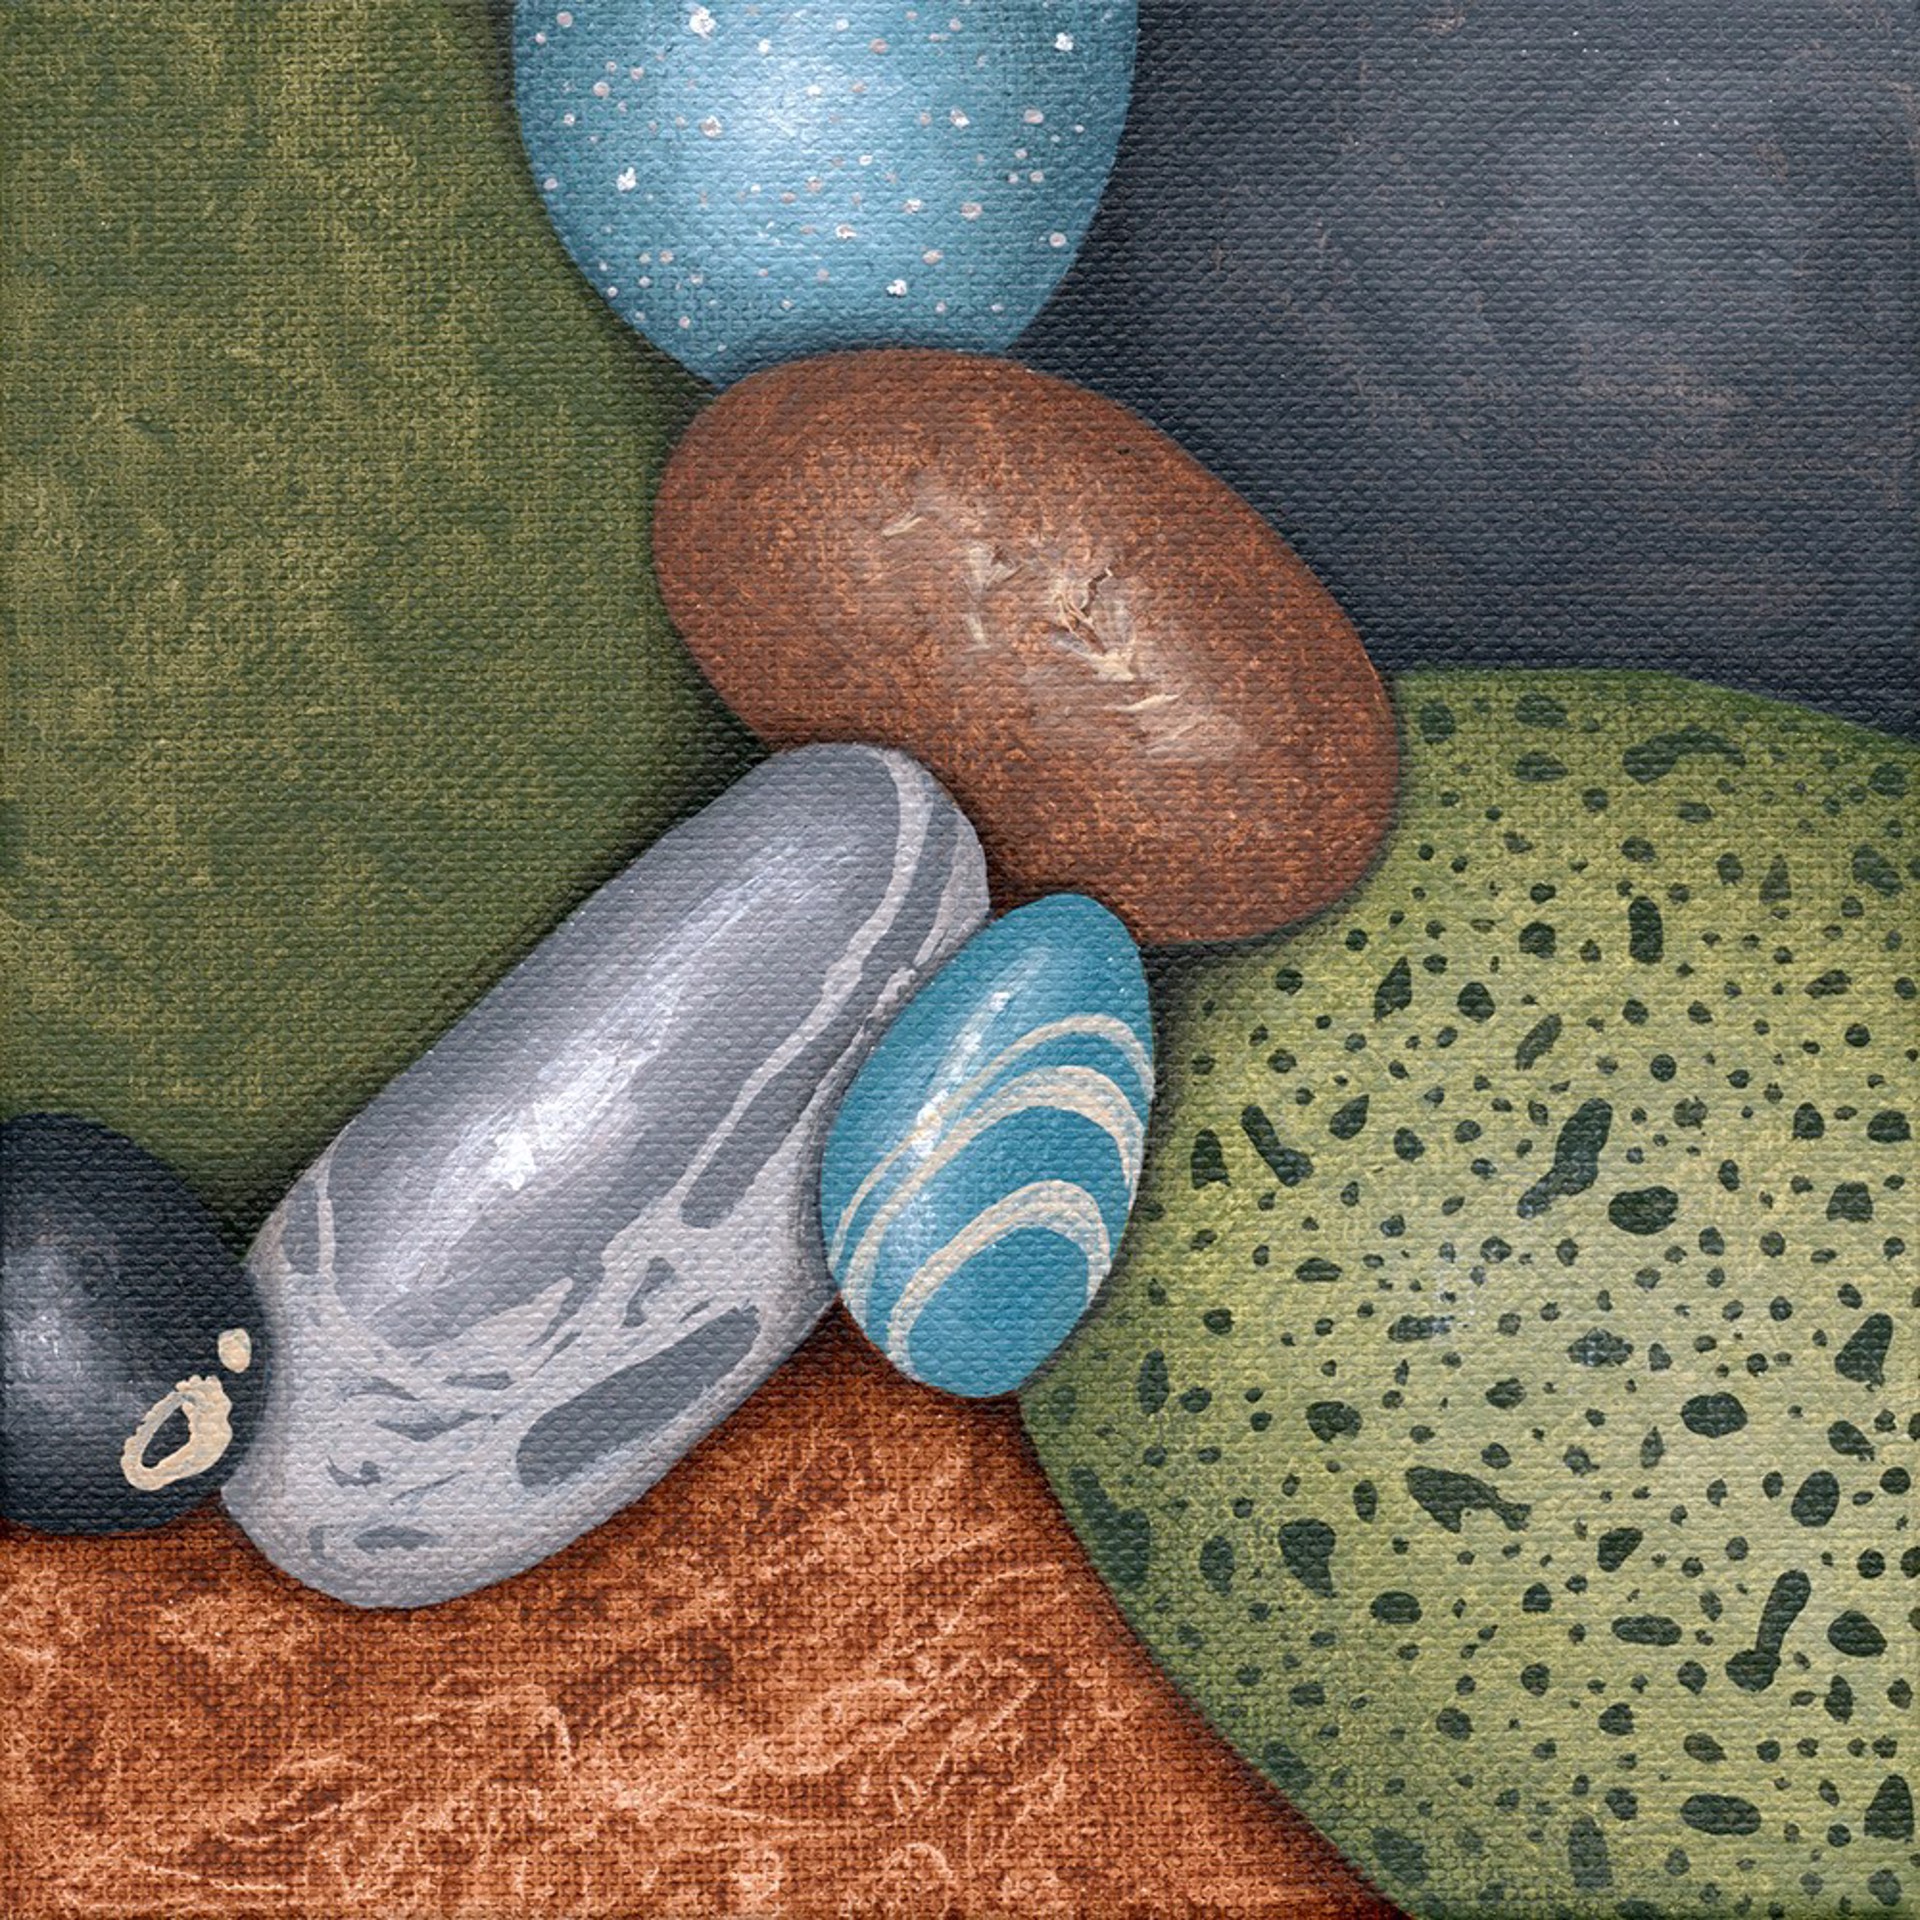 Pebble Painting #625 by Kristina Boardman